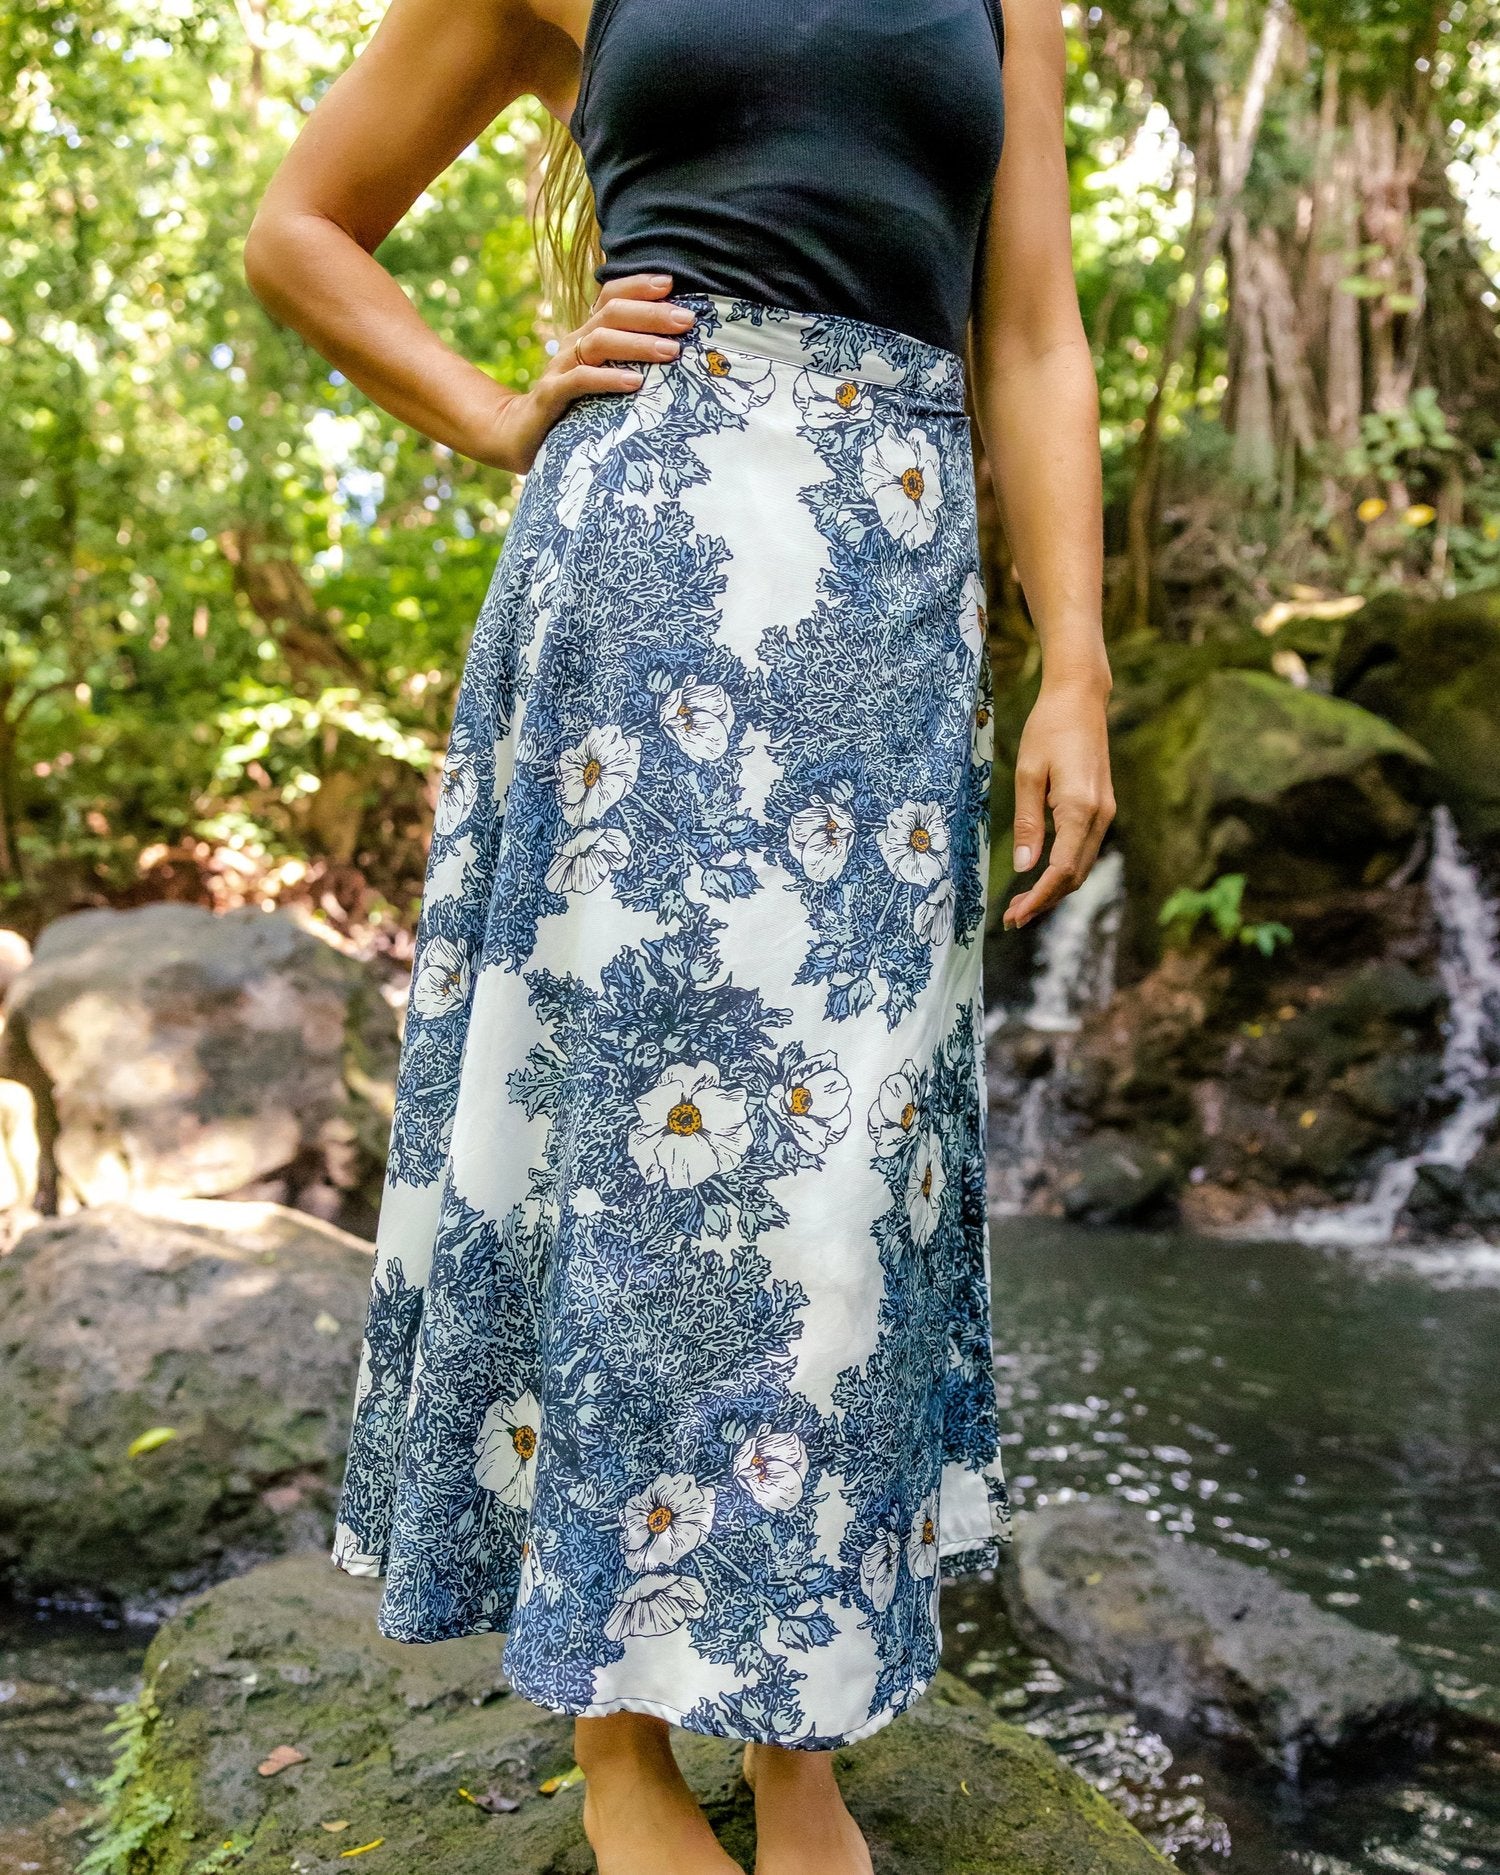 Pop-Up Mākeke - David Shepard Hawaii - Puakala Women's Midi Wrap Skirt - Close Up